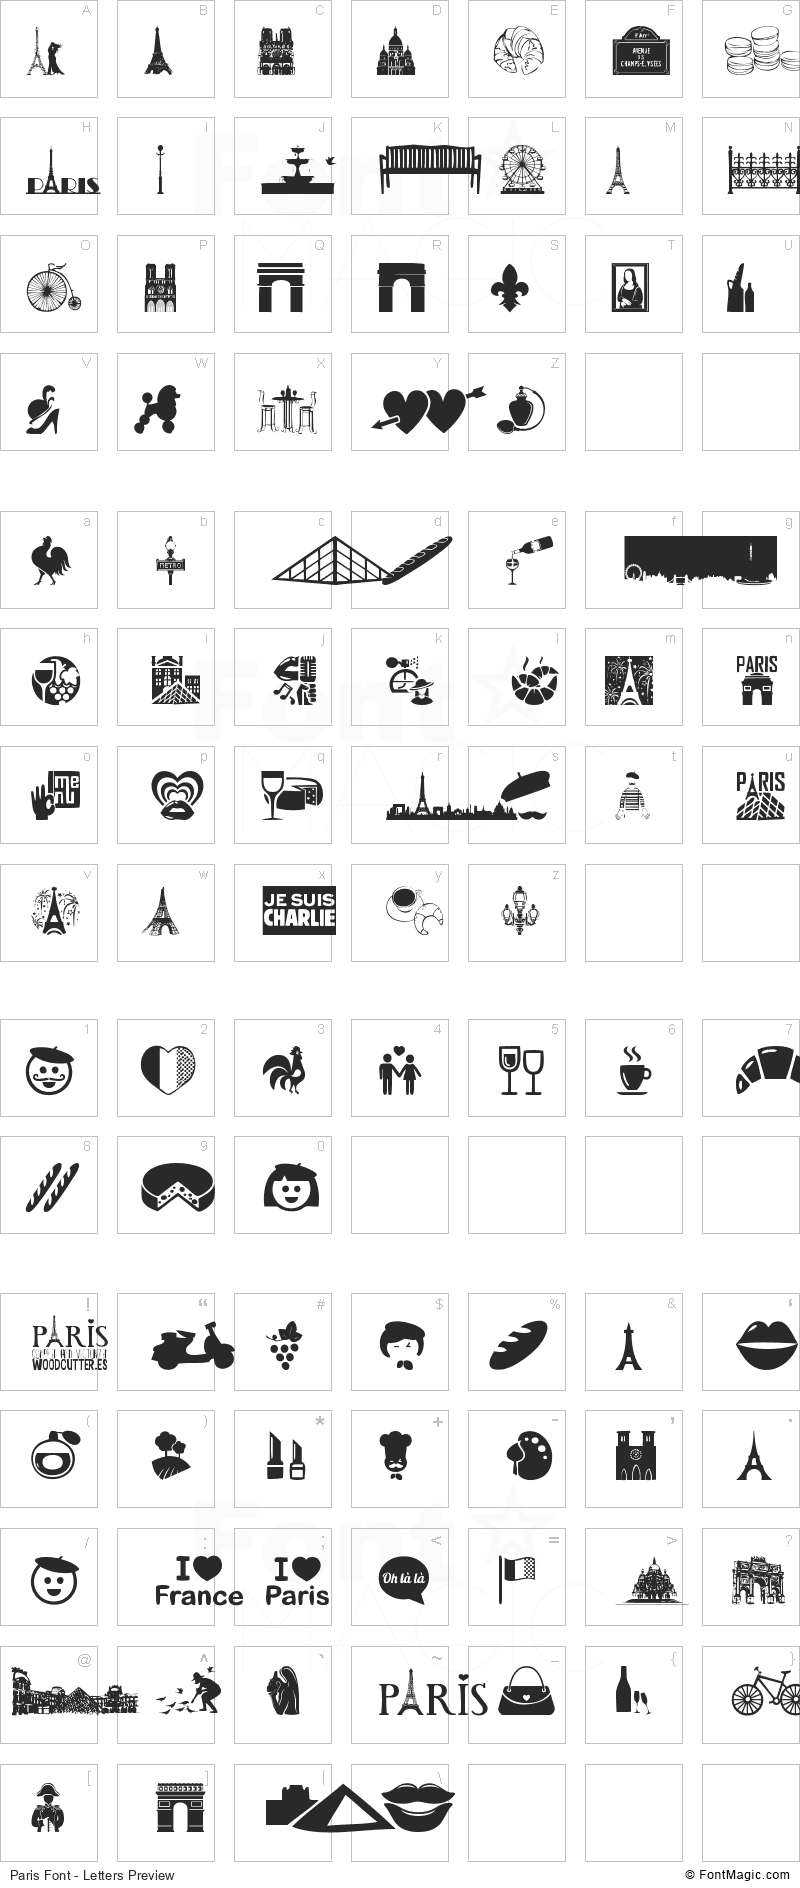 Paris Font - All Latters Preview Chart